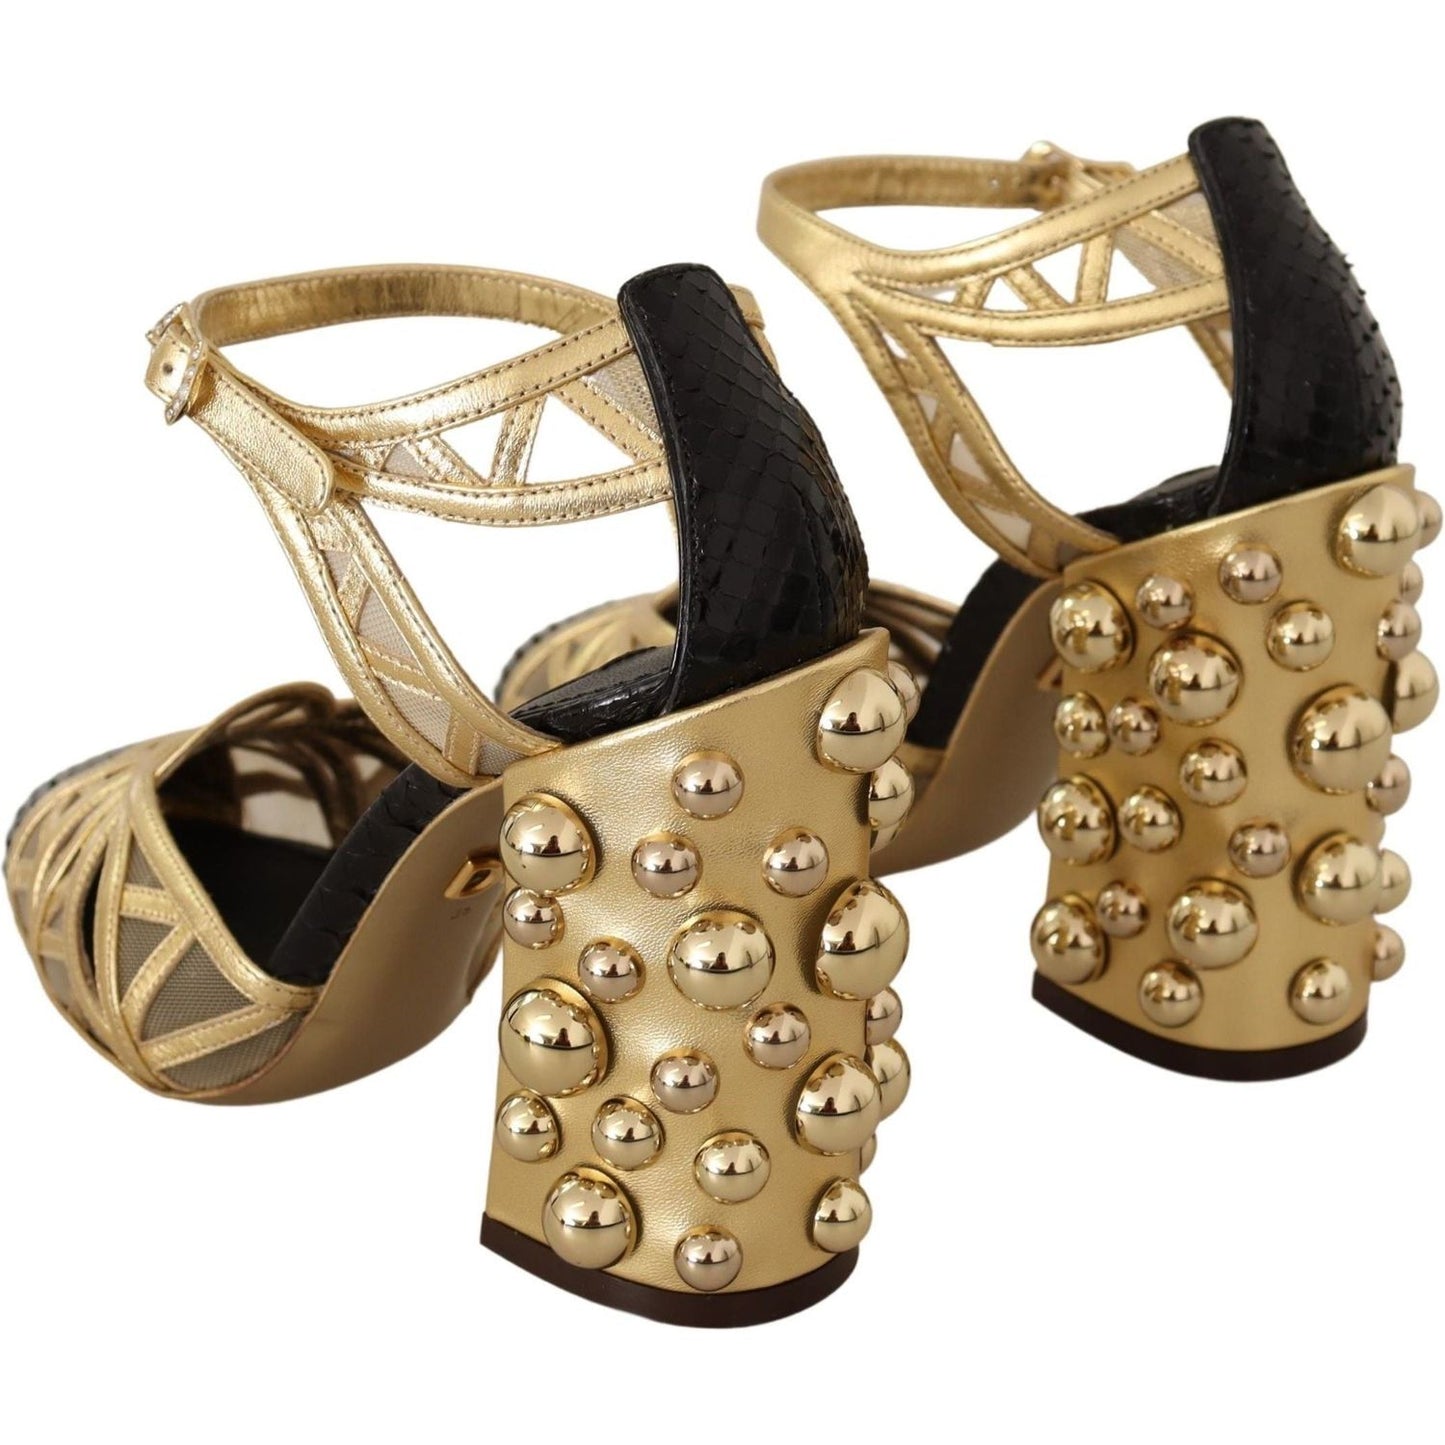 Dolce & Gabbana Elegant Crystal Studded Leather Pumps black-gold-leather-studded-ankle-straps-shoes IMG_5834-9f0e031b-ab4.jpg